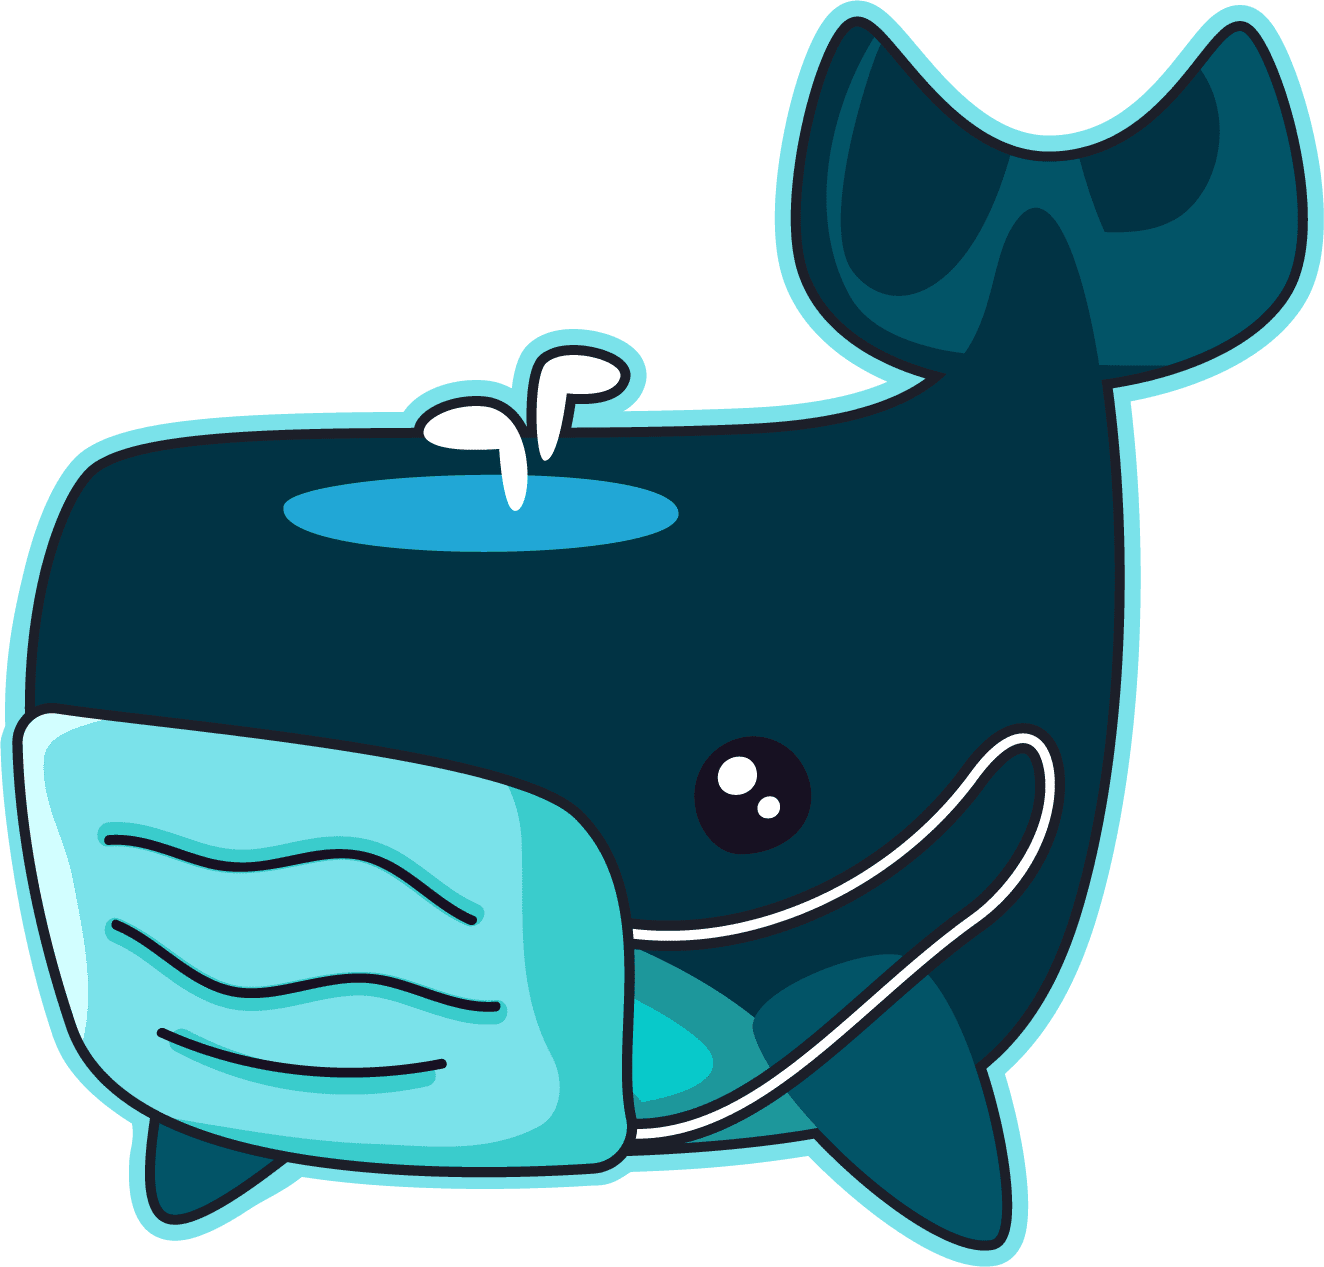 COVID Whales logo